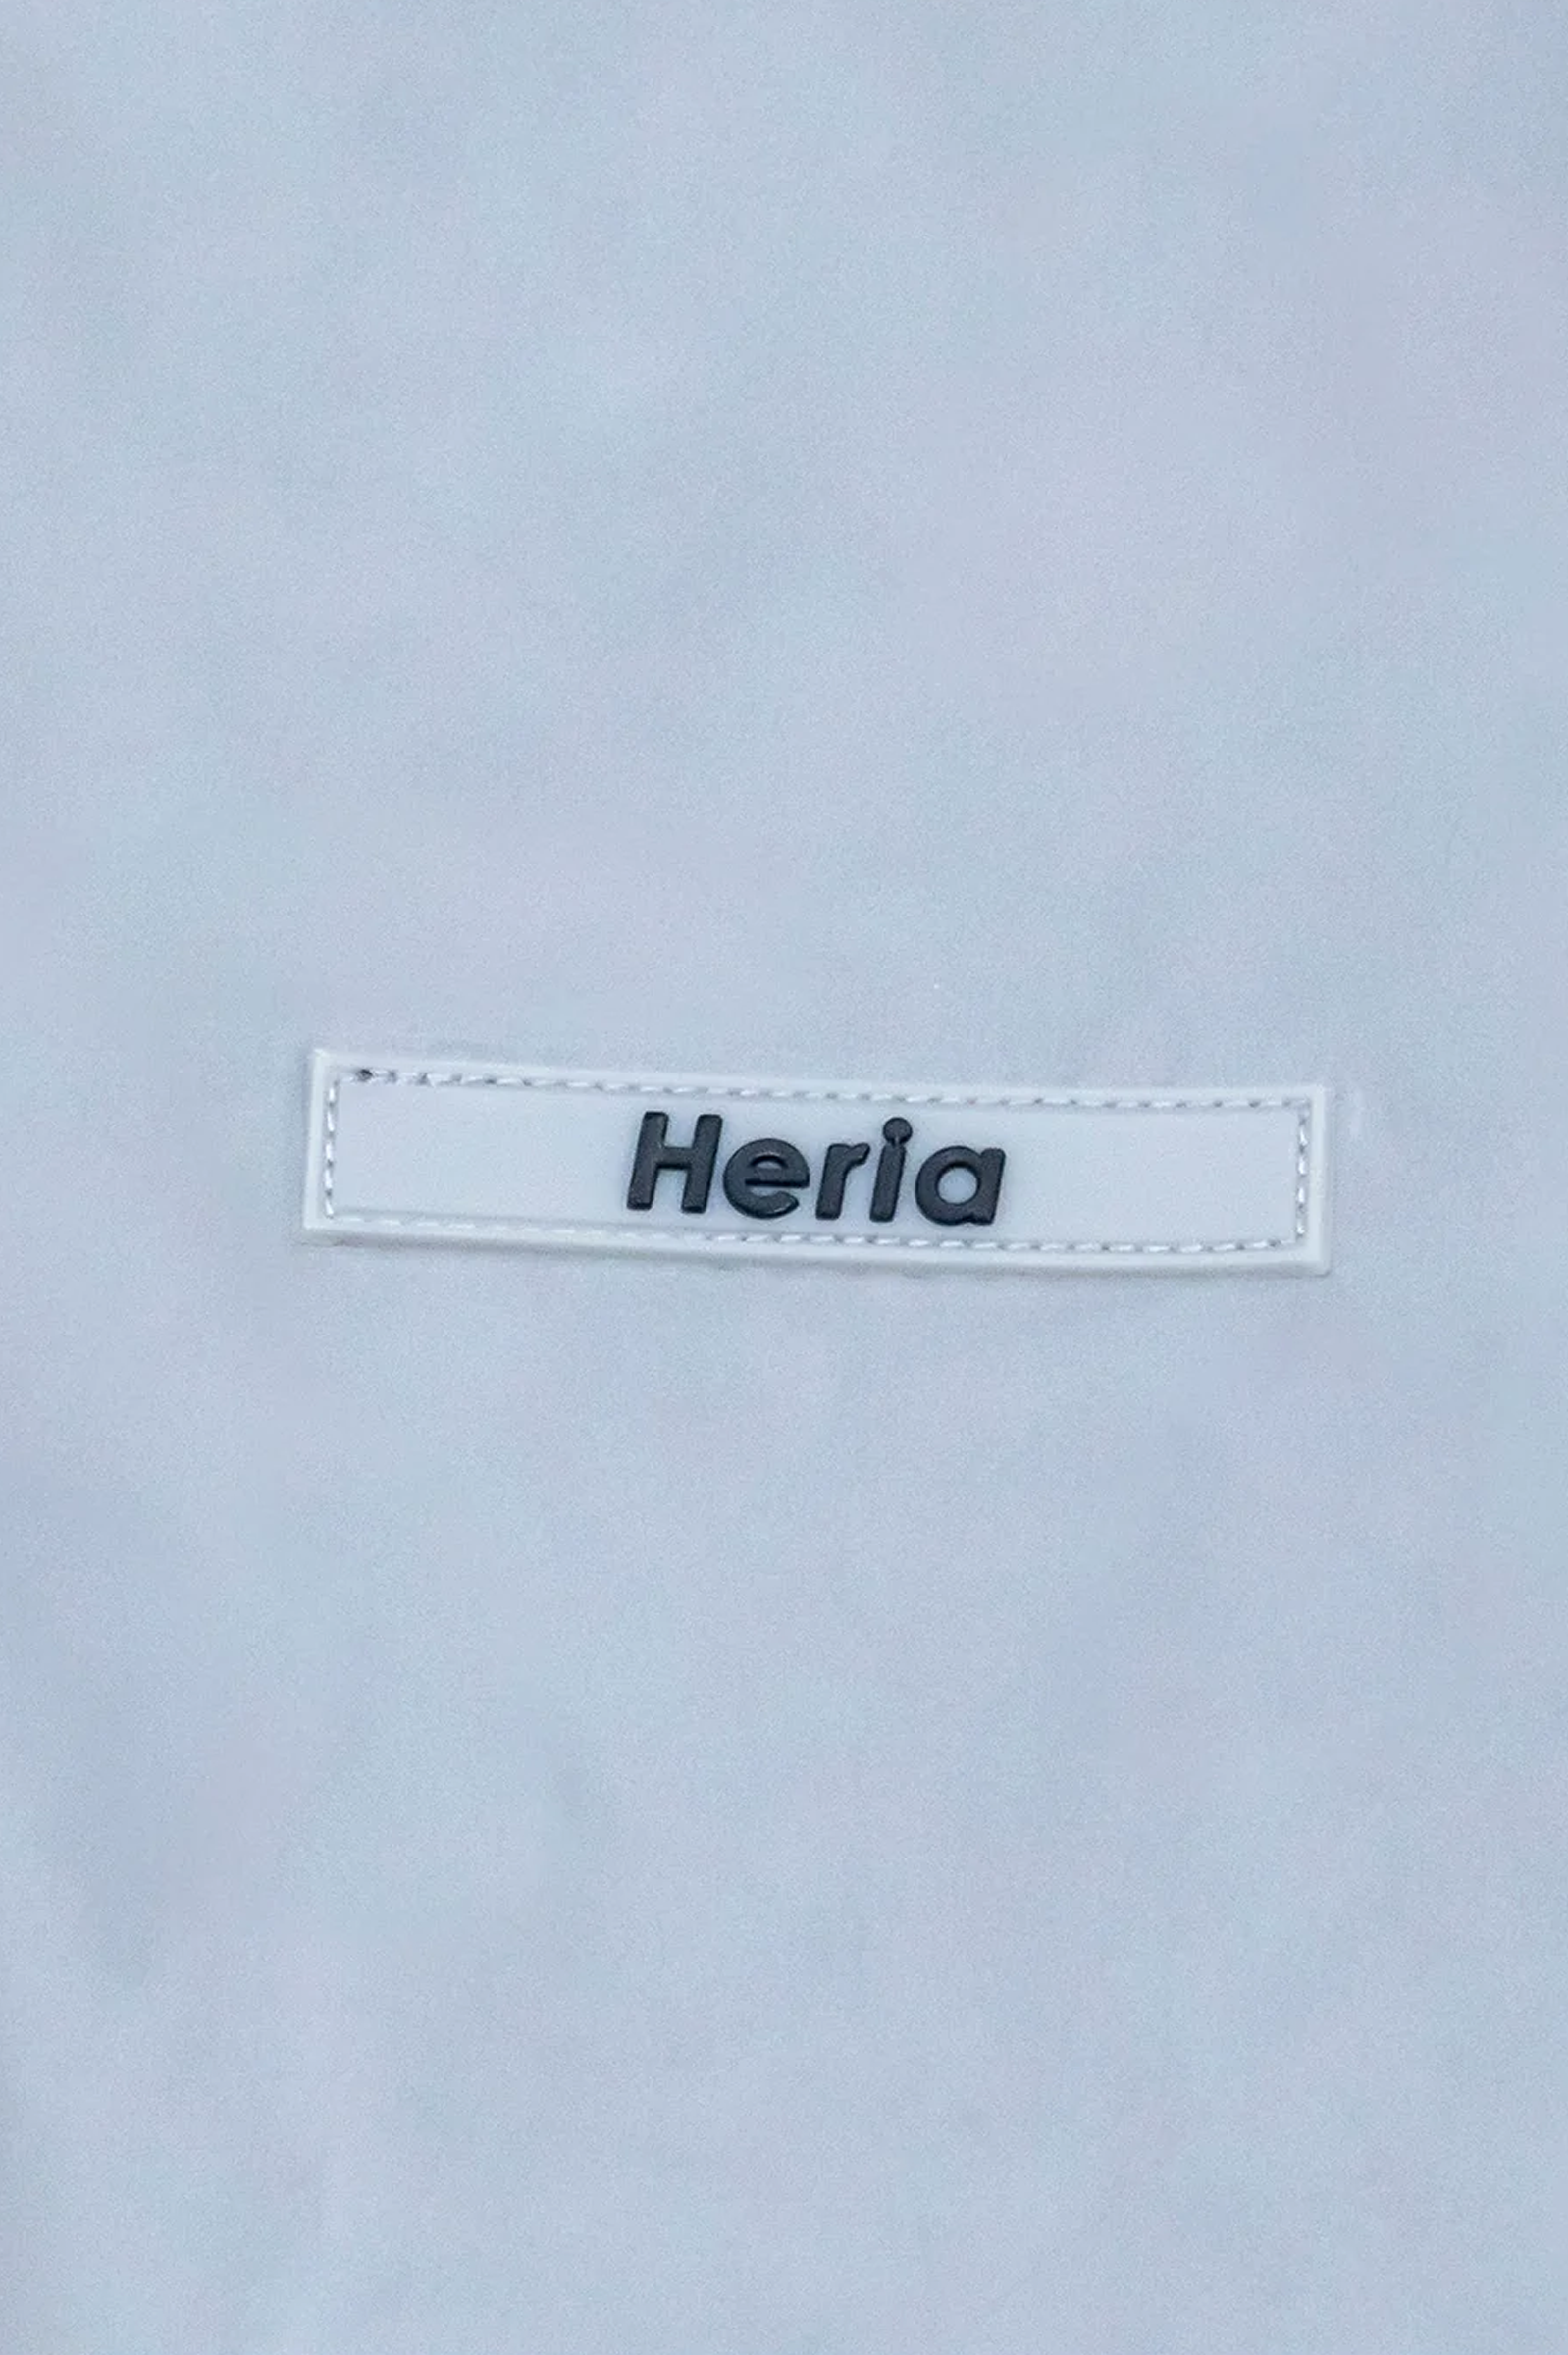 Heria 3M Reflective Windbreaker Jacket